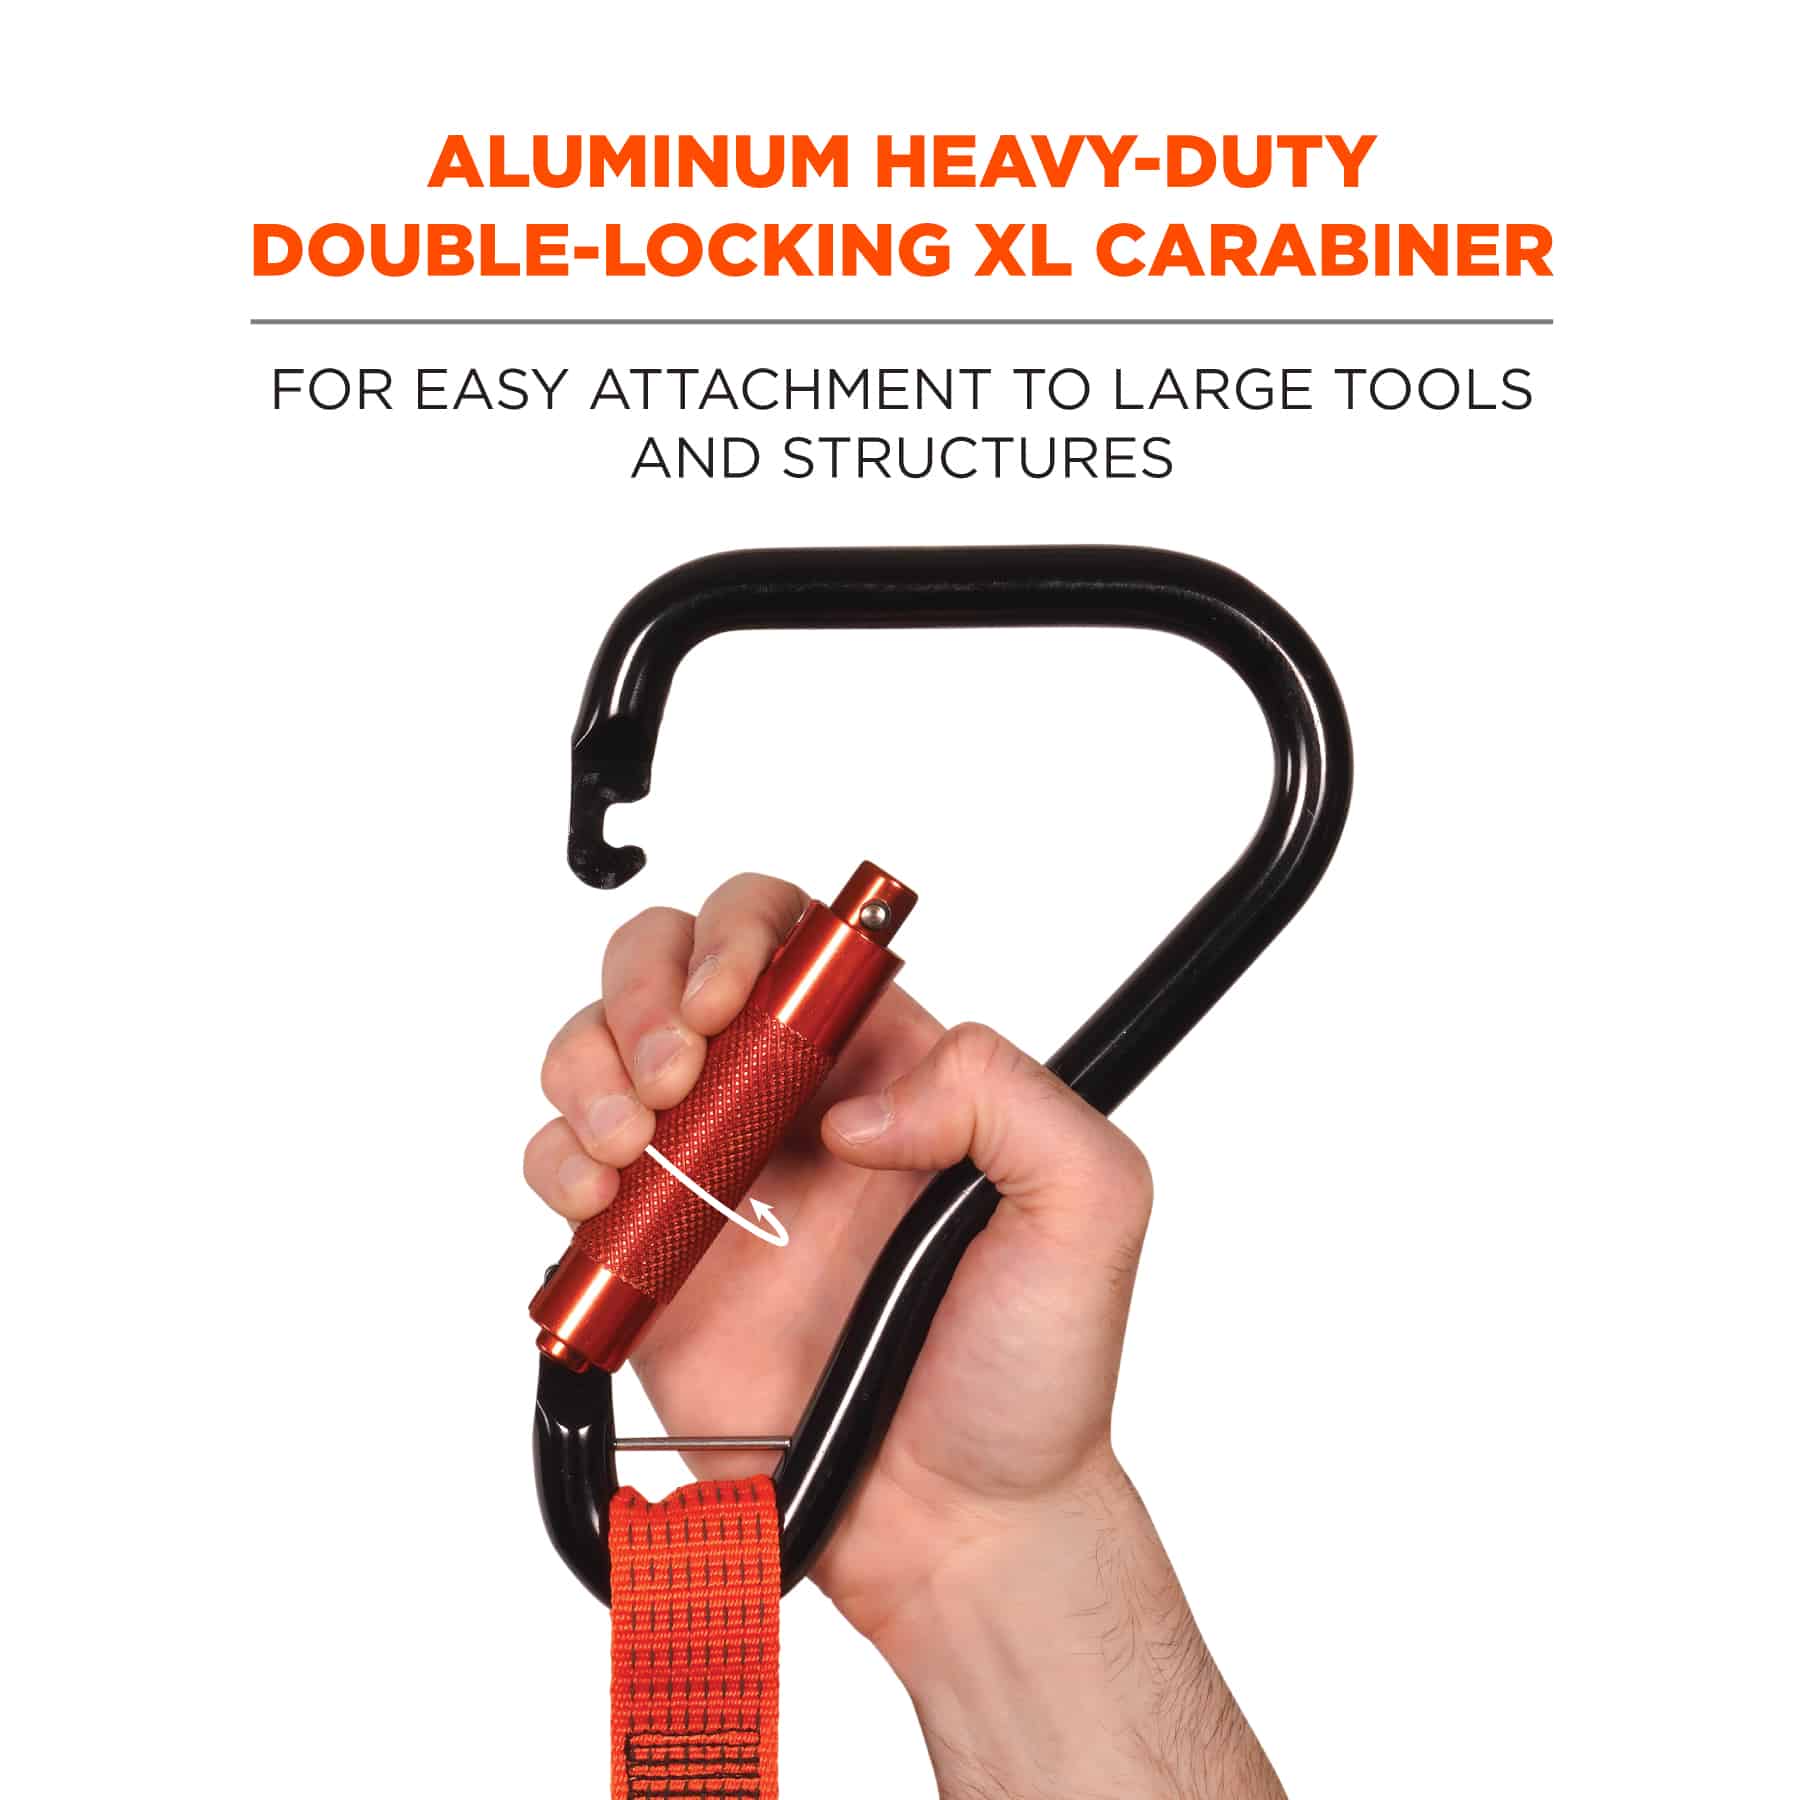 Buy Heavy Duty Carabiner online